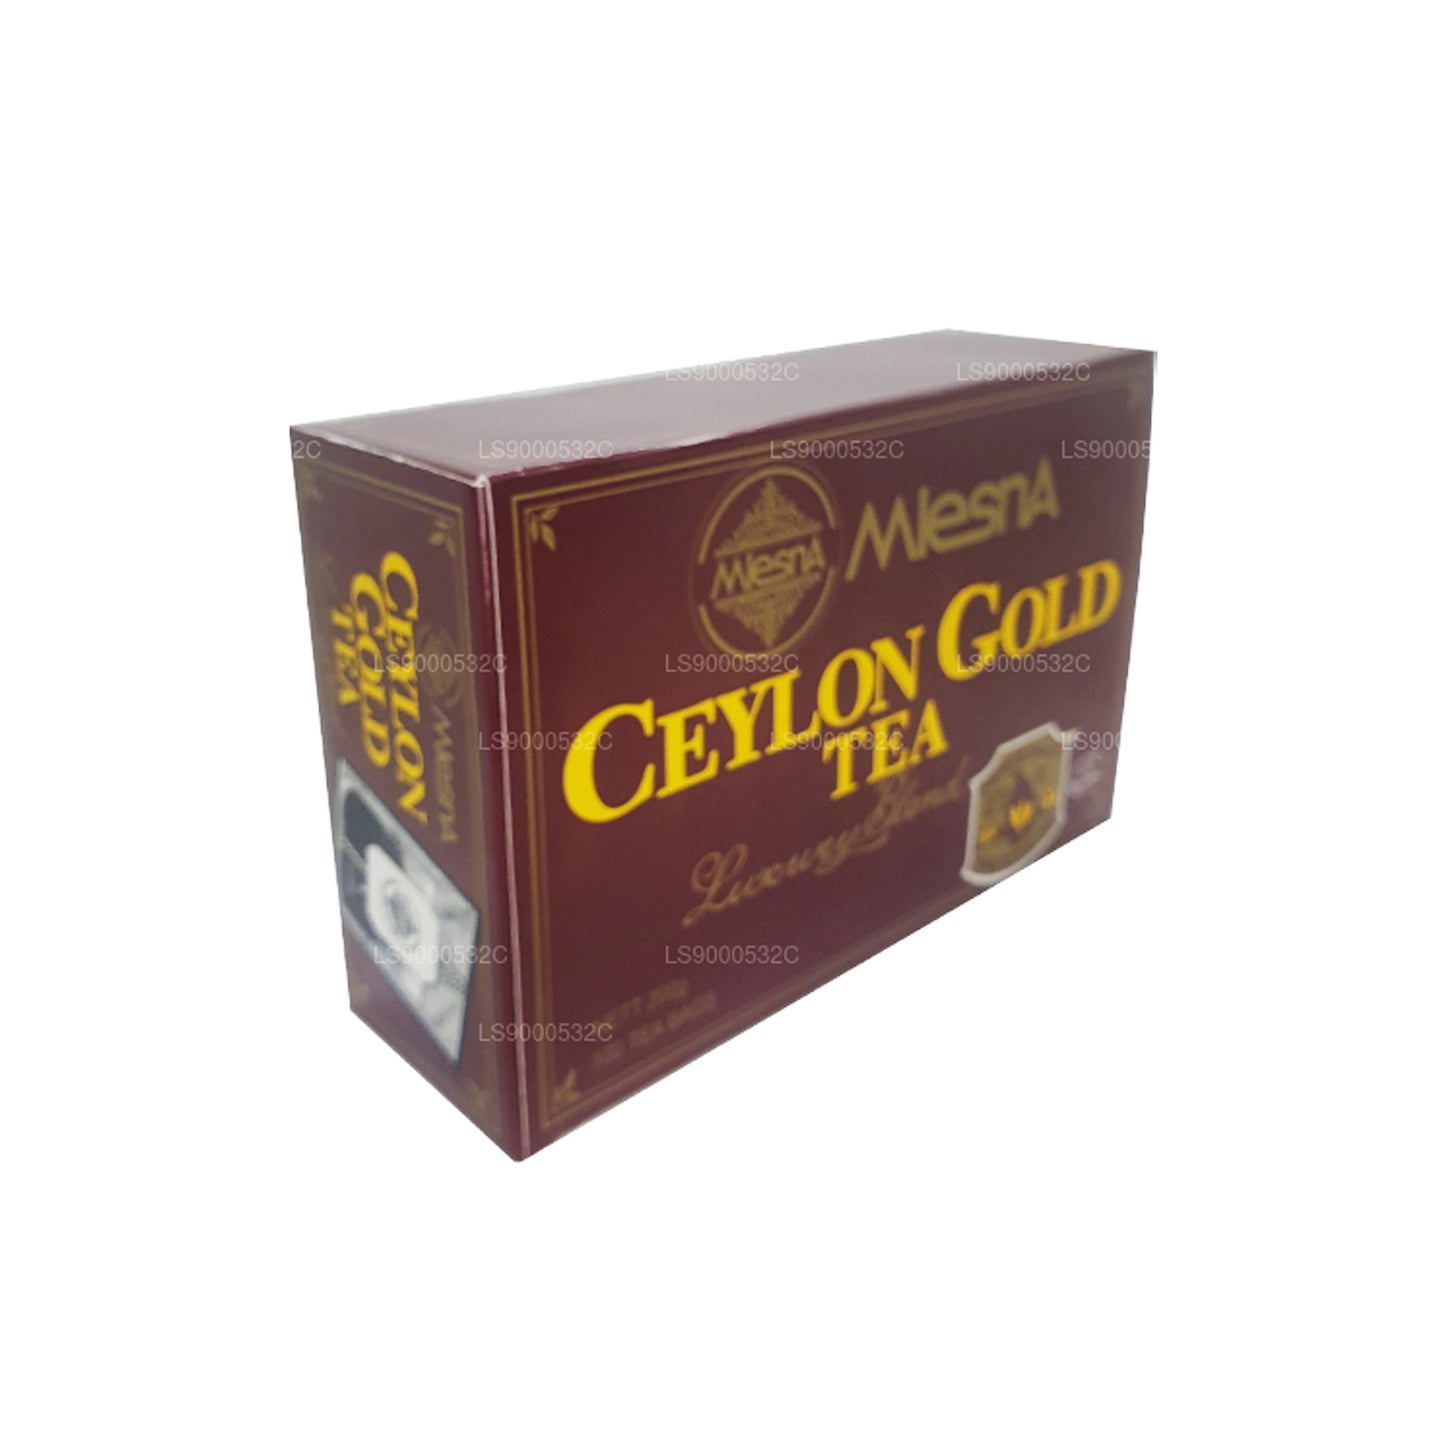 Mlesna Ceylon Gold Tea (200g) 100 Tea Bags